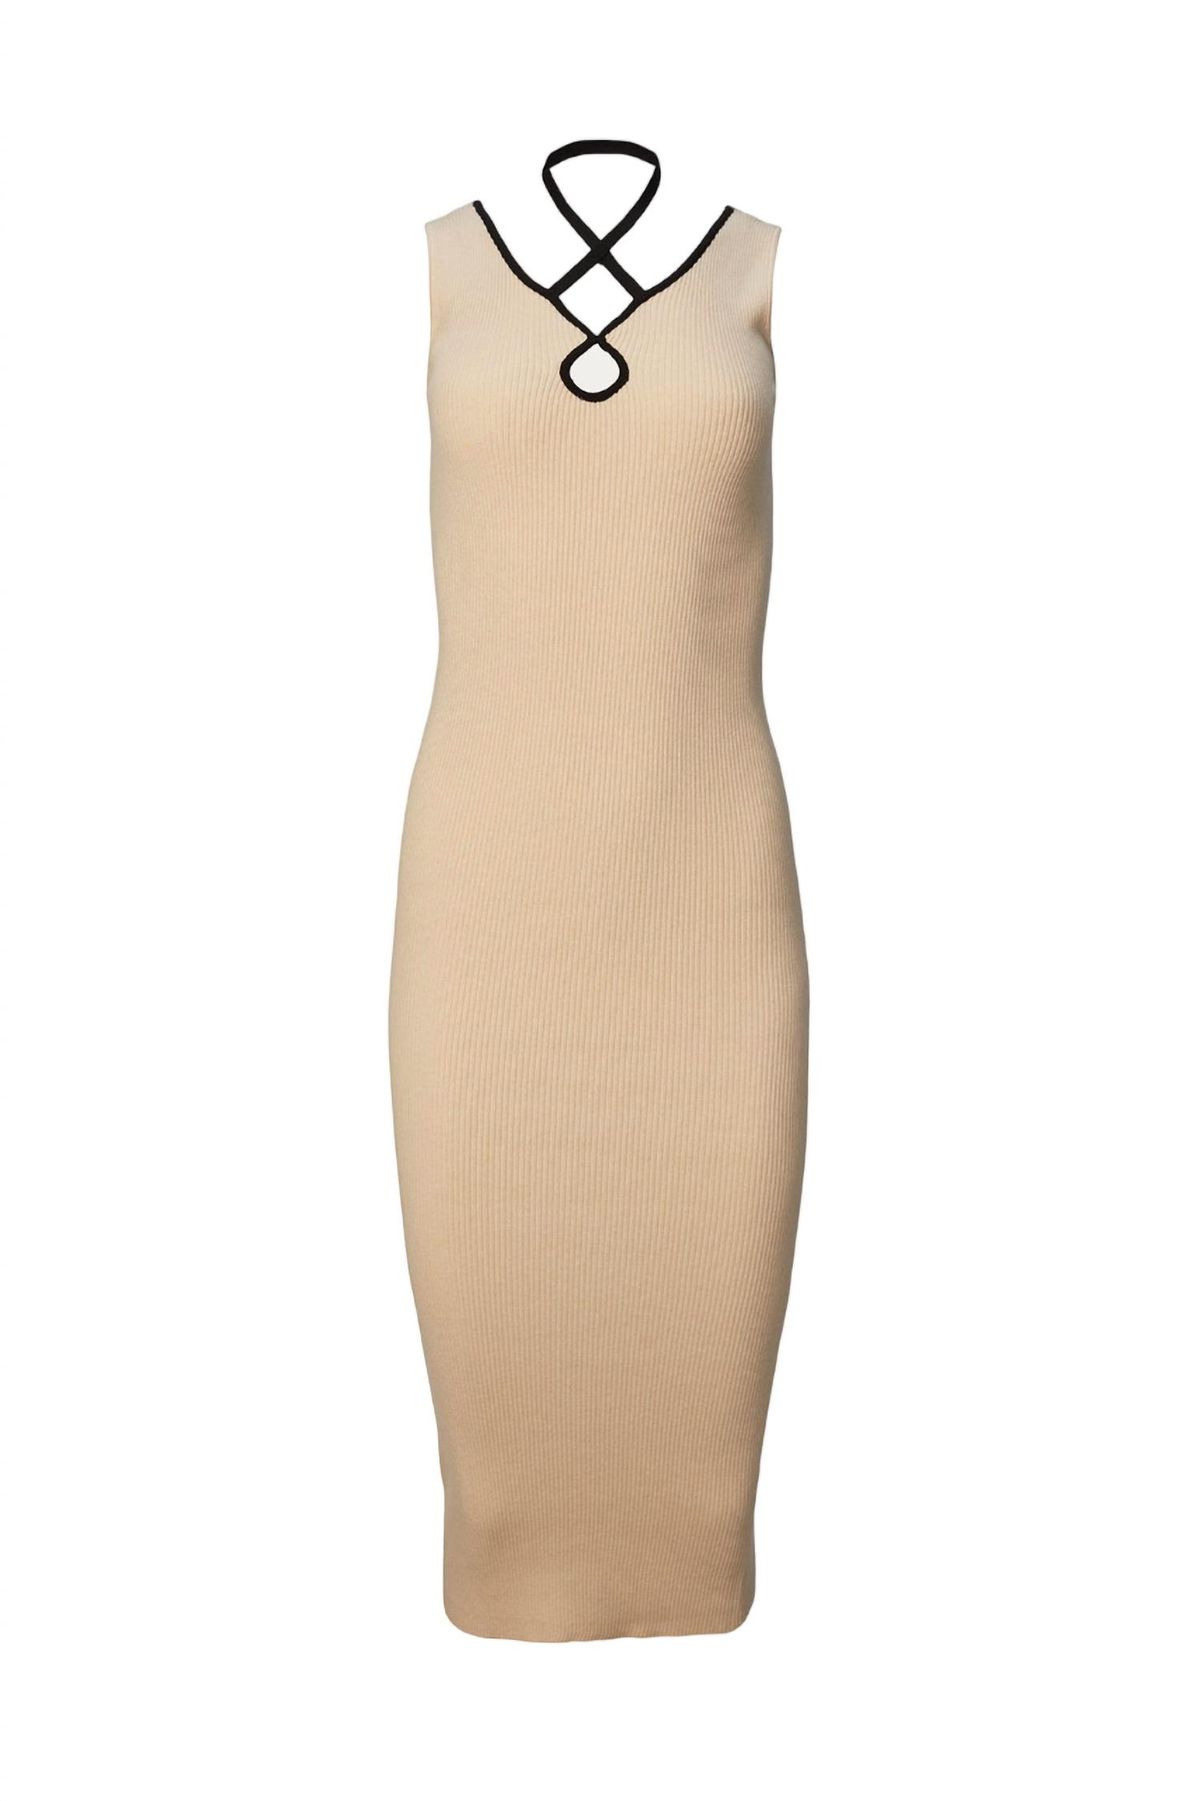 Style 1-1010215816-3236 WYNN HAMLYN Size S Nude Cocktail Dress on Queenly